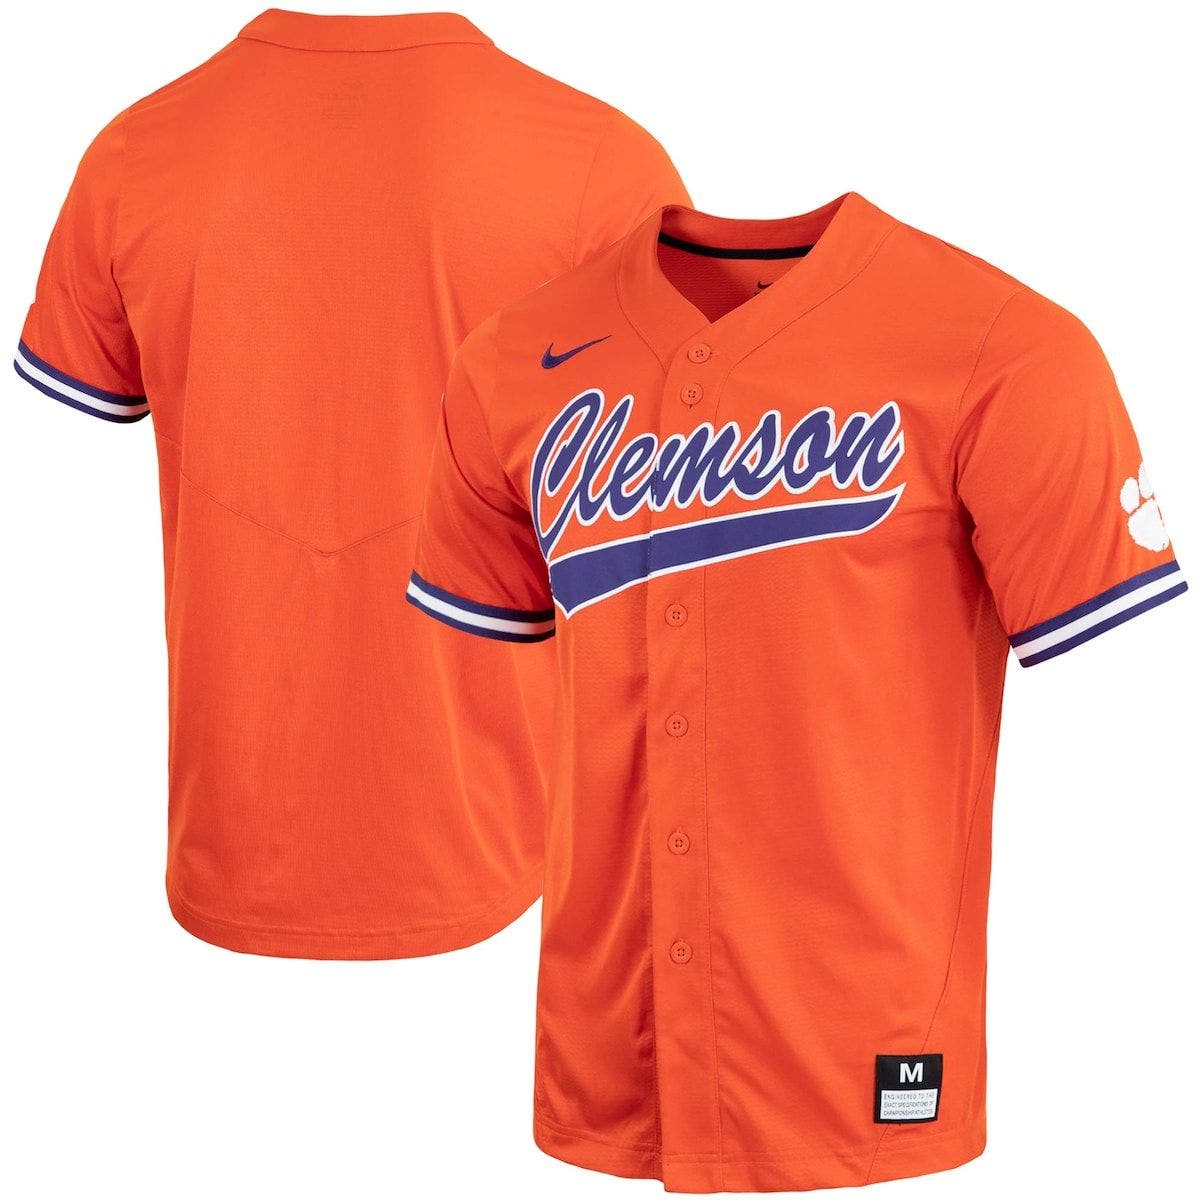 Mens Orange Clemson Tigers Replica Full-Button Baseball Jersey at Nordstrom Nordstrom Men Sport & Swimwear Sportswear Sports Tops 